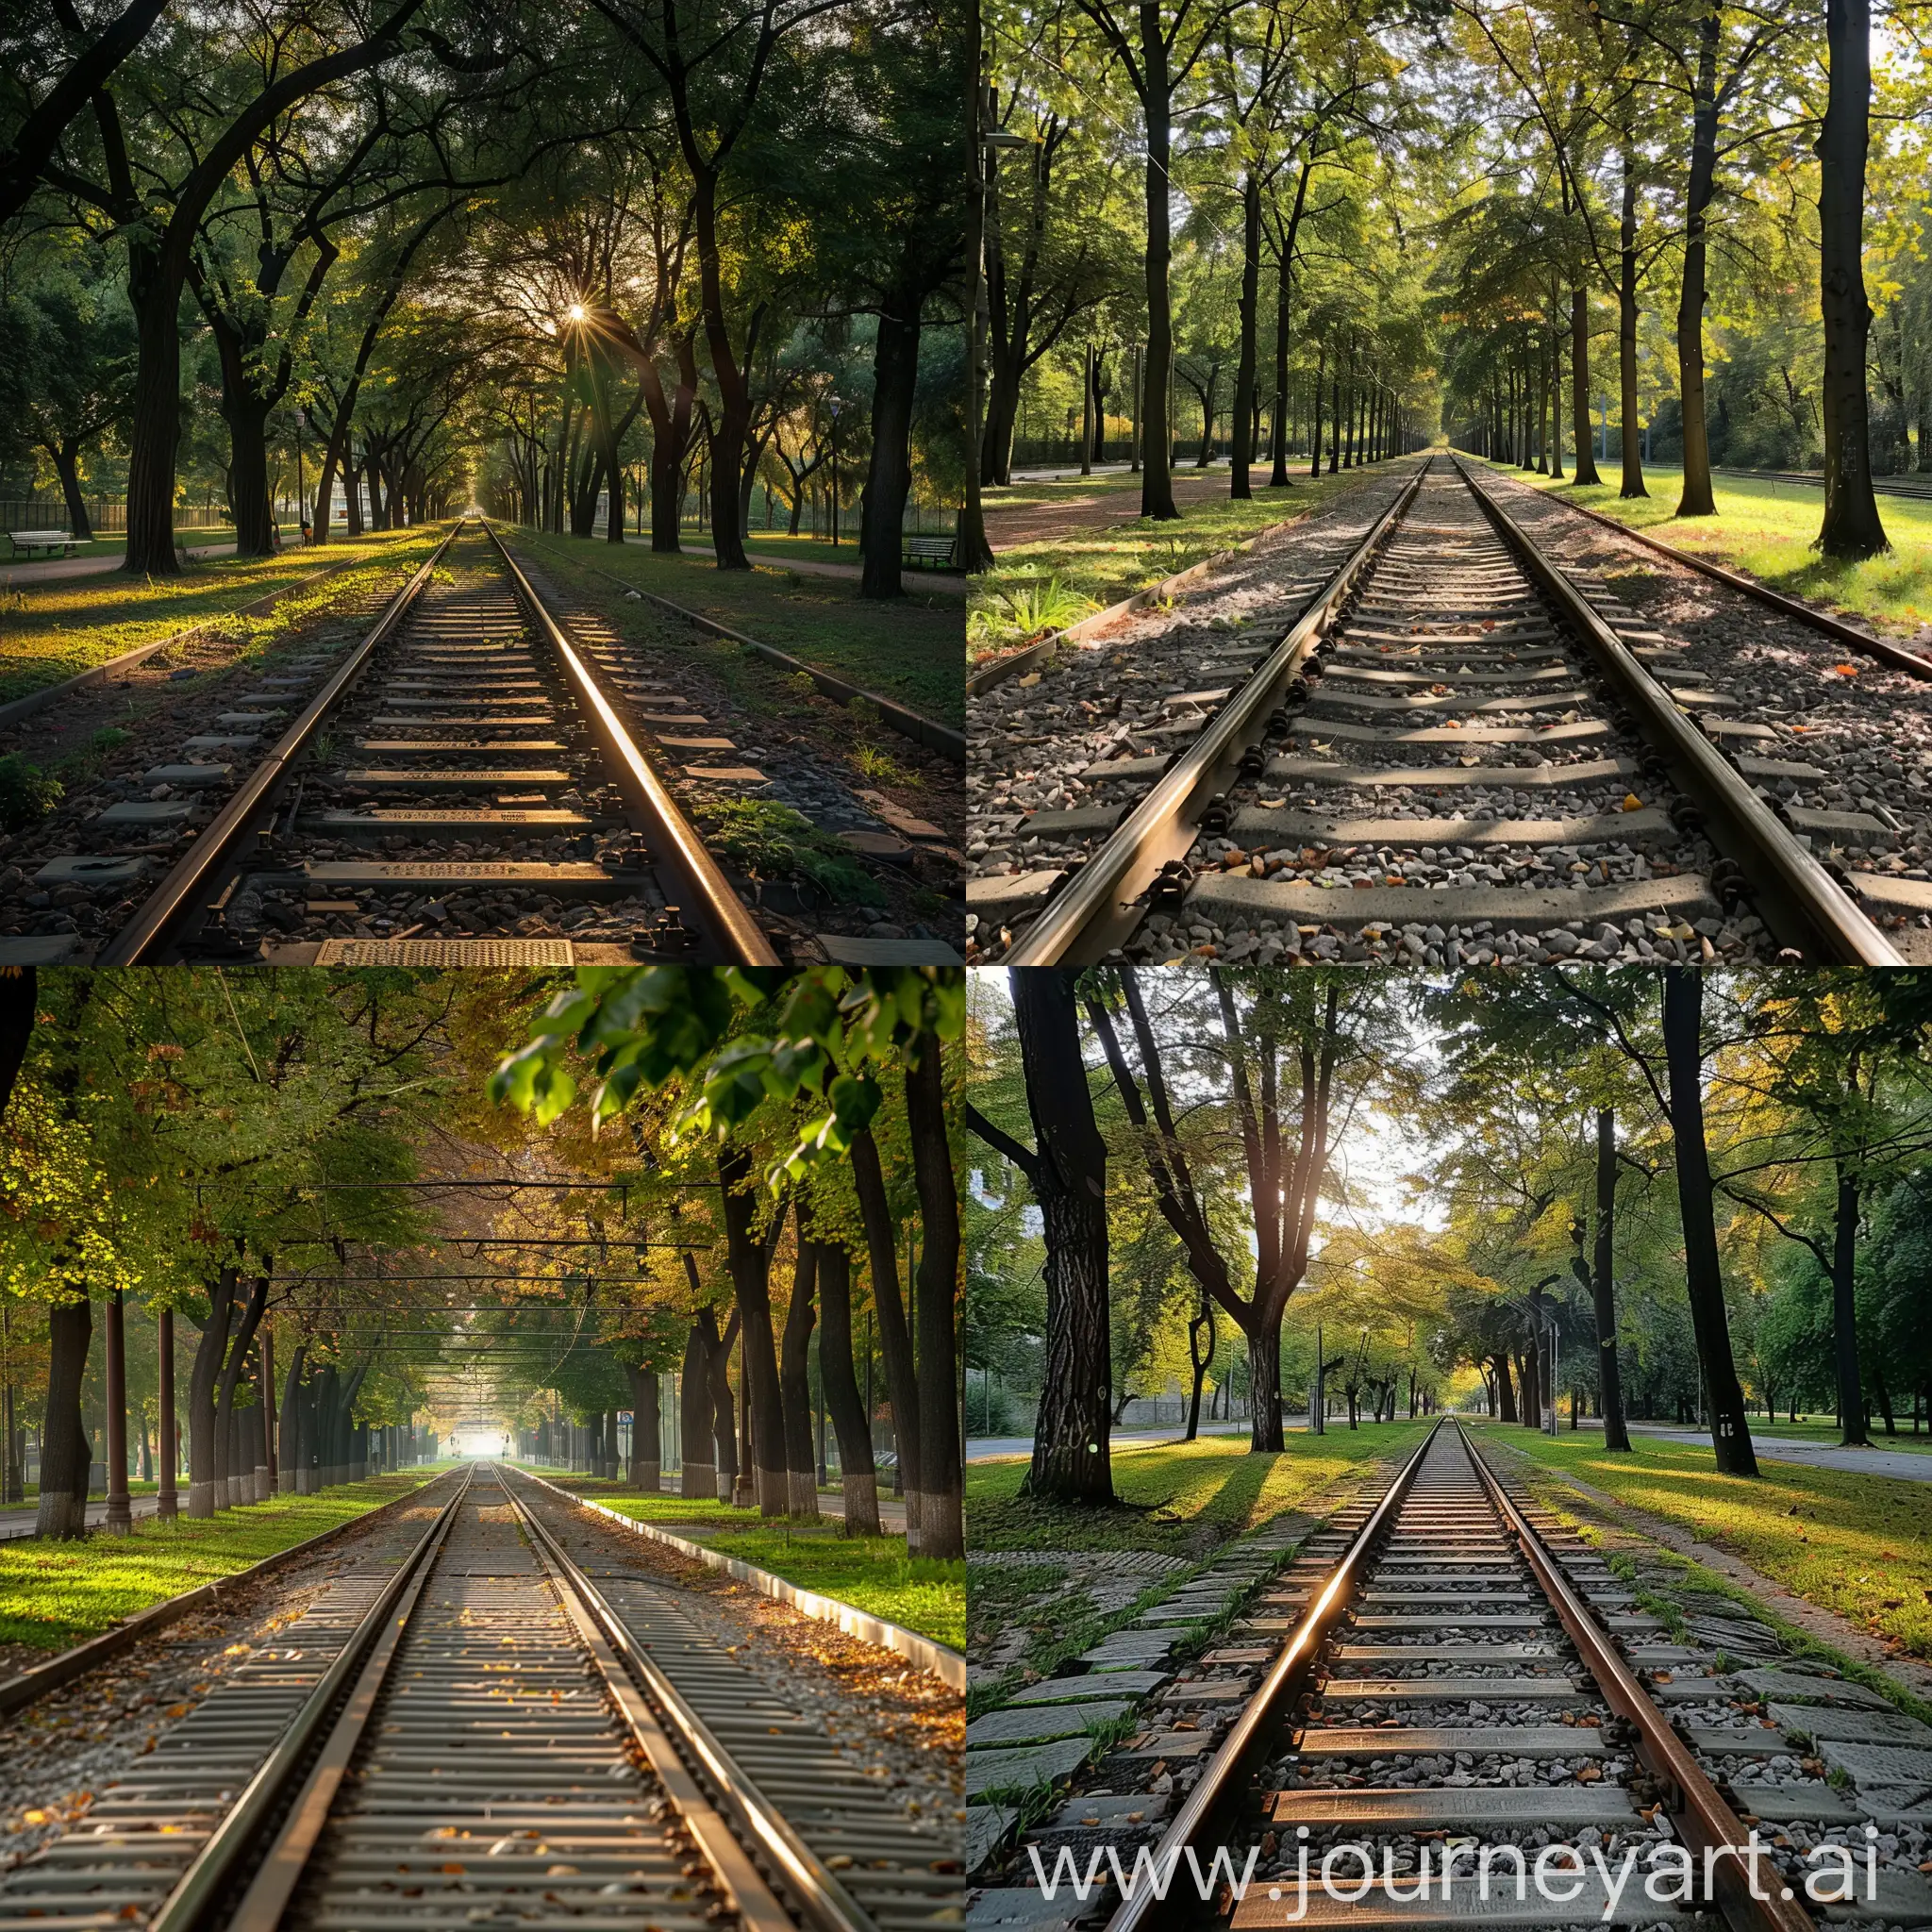 Urban-Linear-Park-on-Abandoned-Train-Tracks